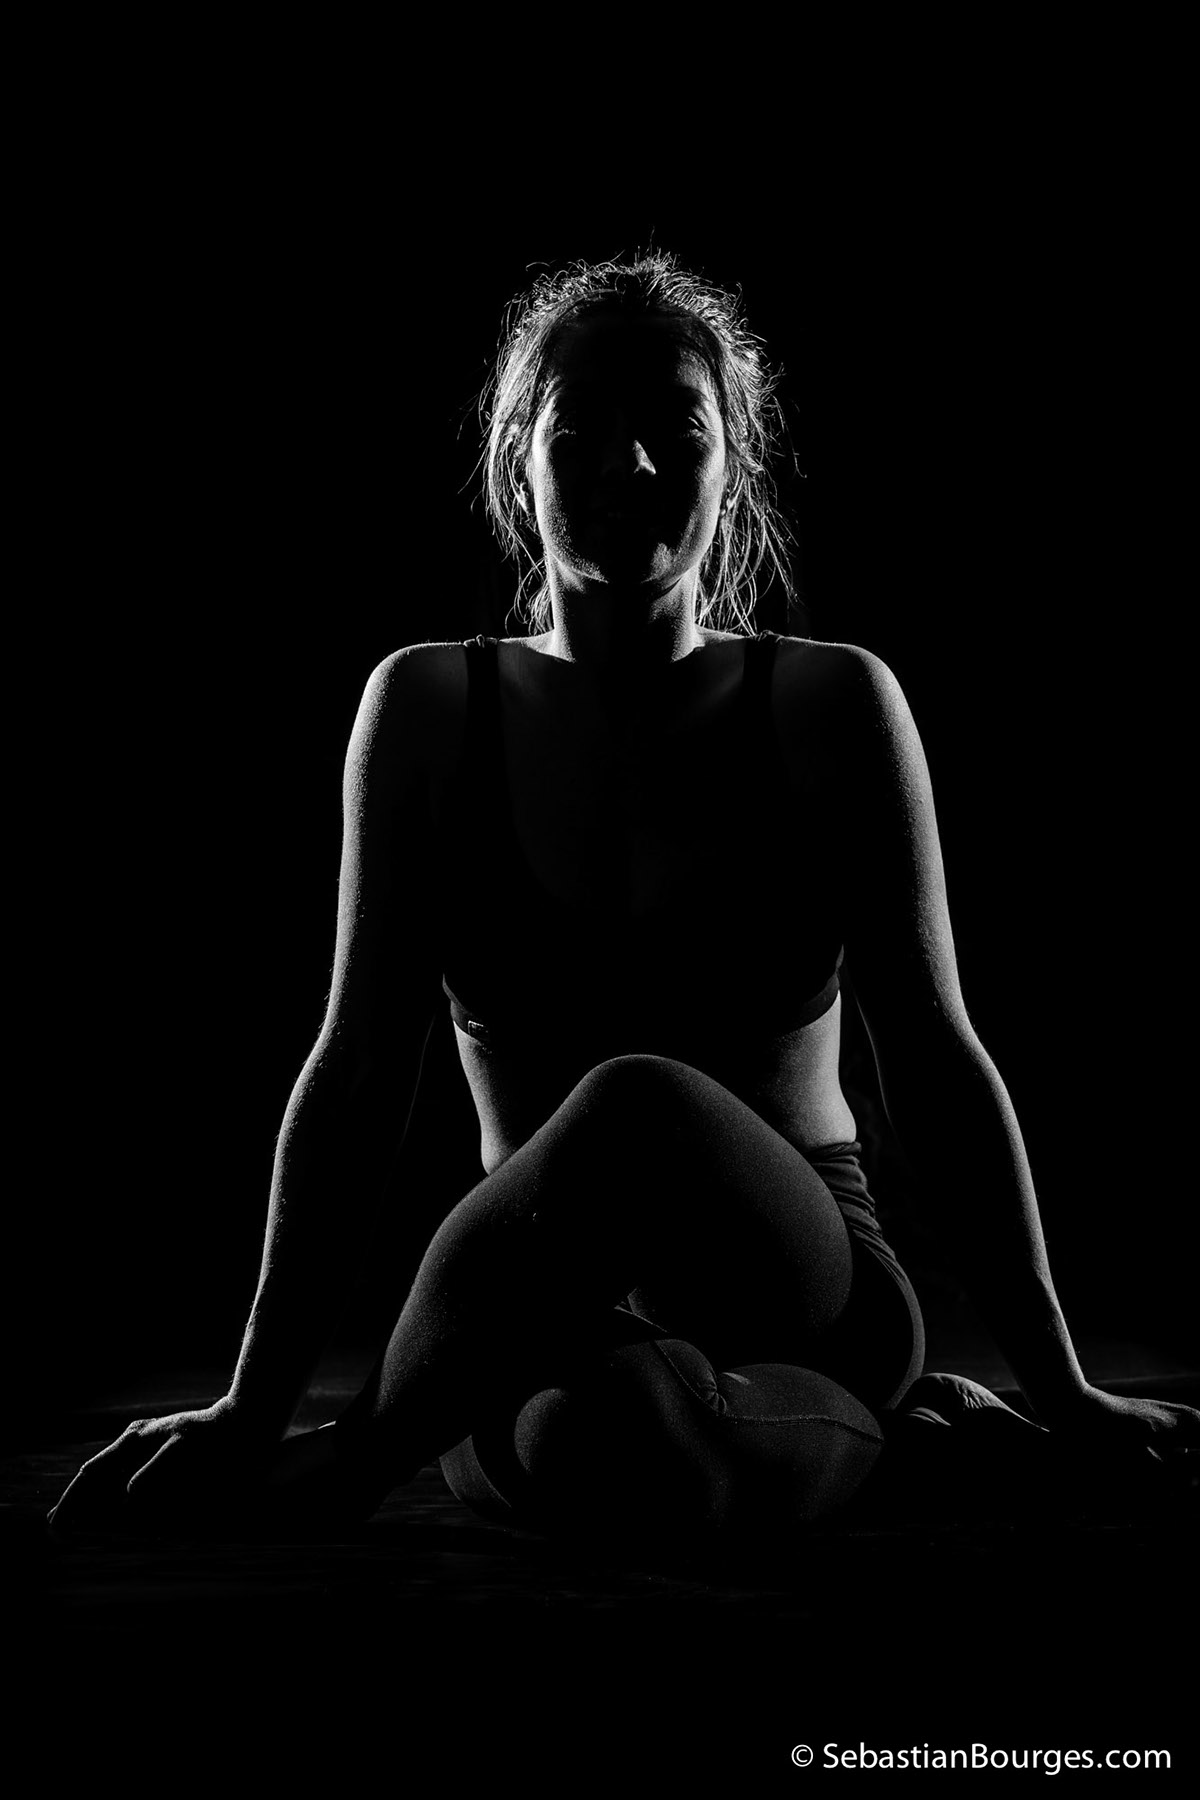 Australia Yoga Academy aya Yoga asanas b&w Silhouettes studio lights black background